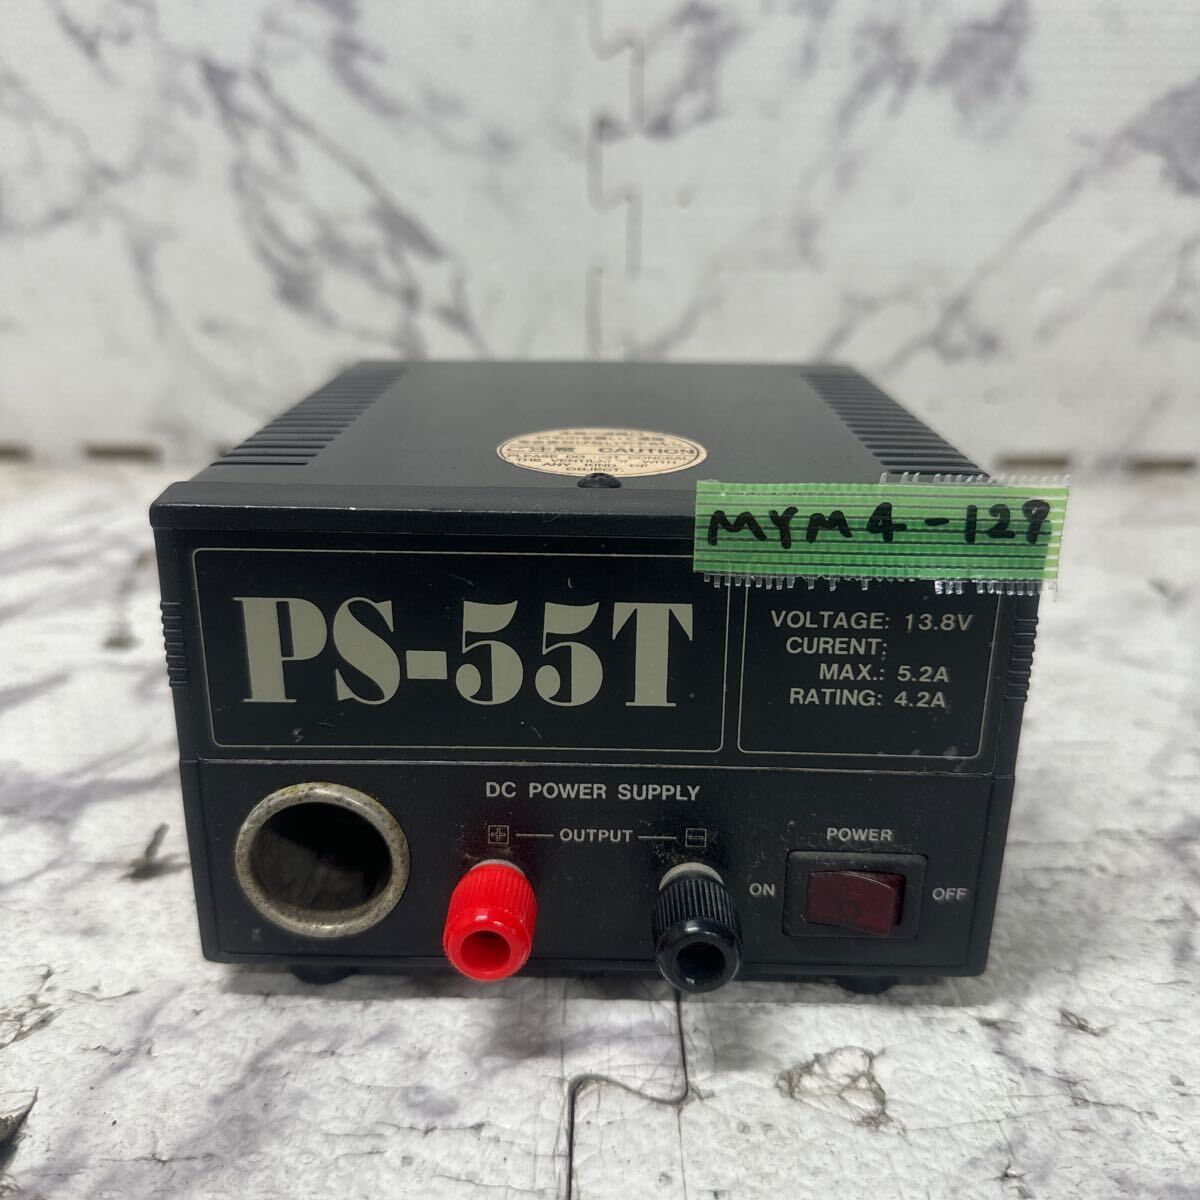 MYM4-129 激安 DC POWER SUPPLY PS-55T パワーサプライ 通電不可 ジャンク品 ※3回再出品で処分の画像1